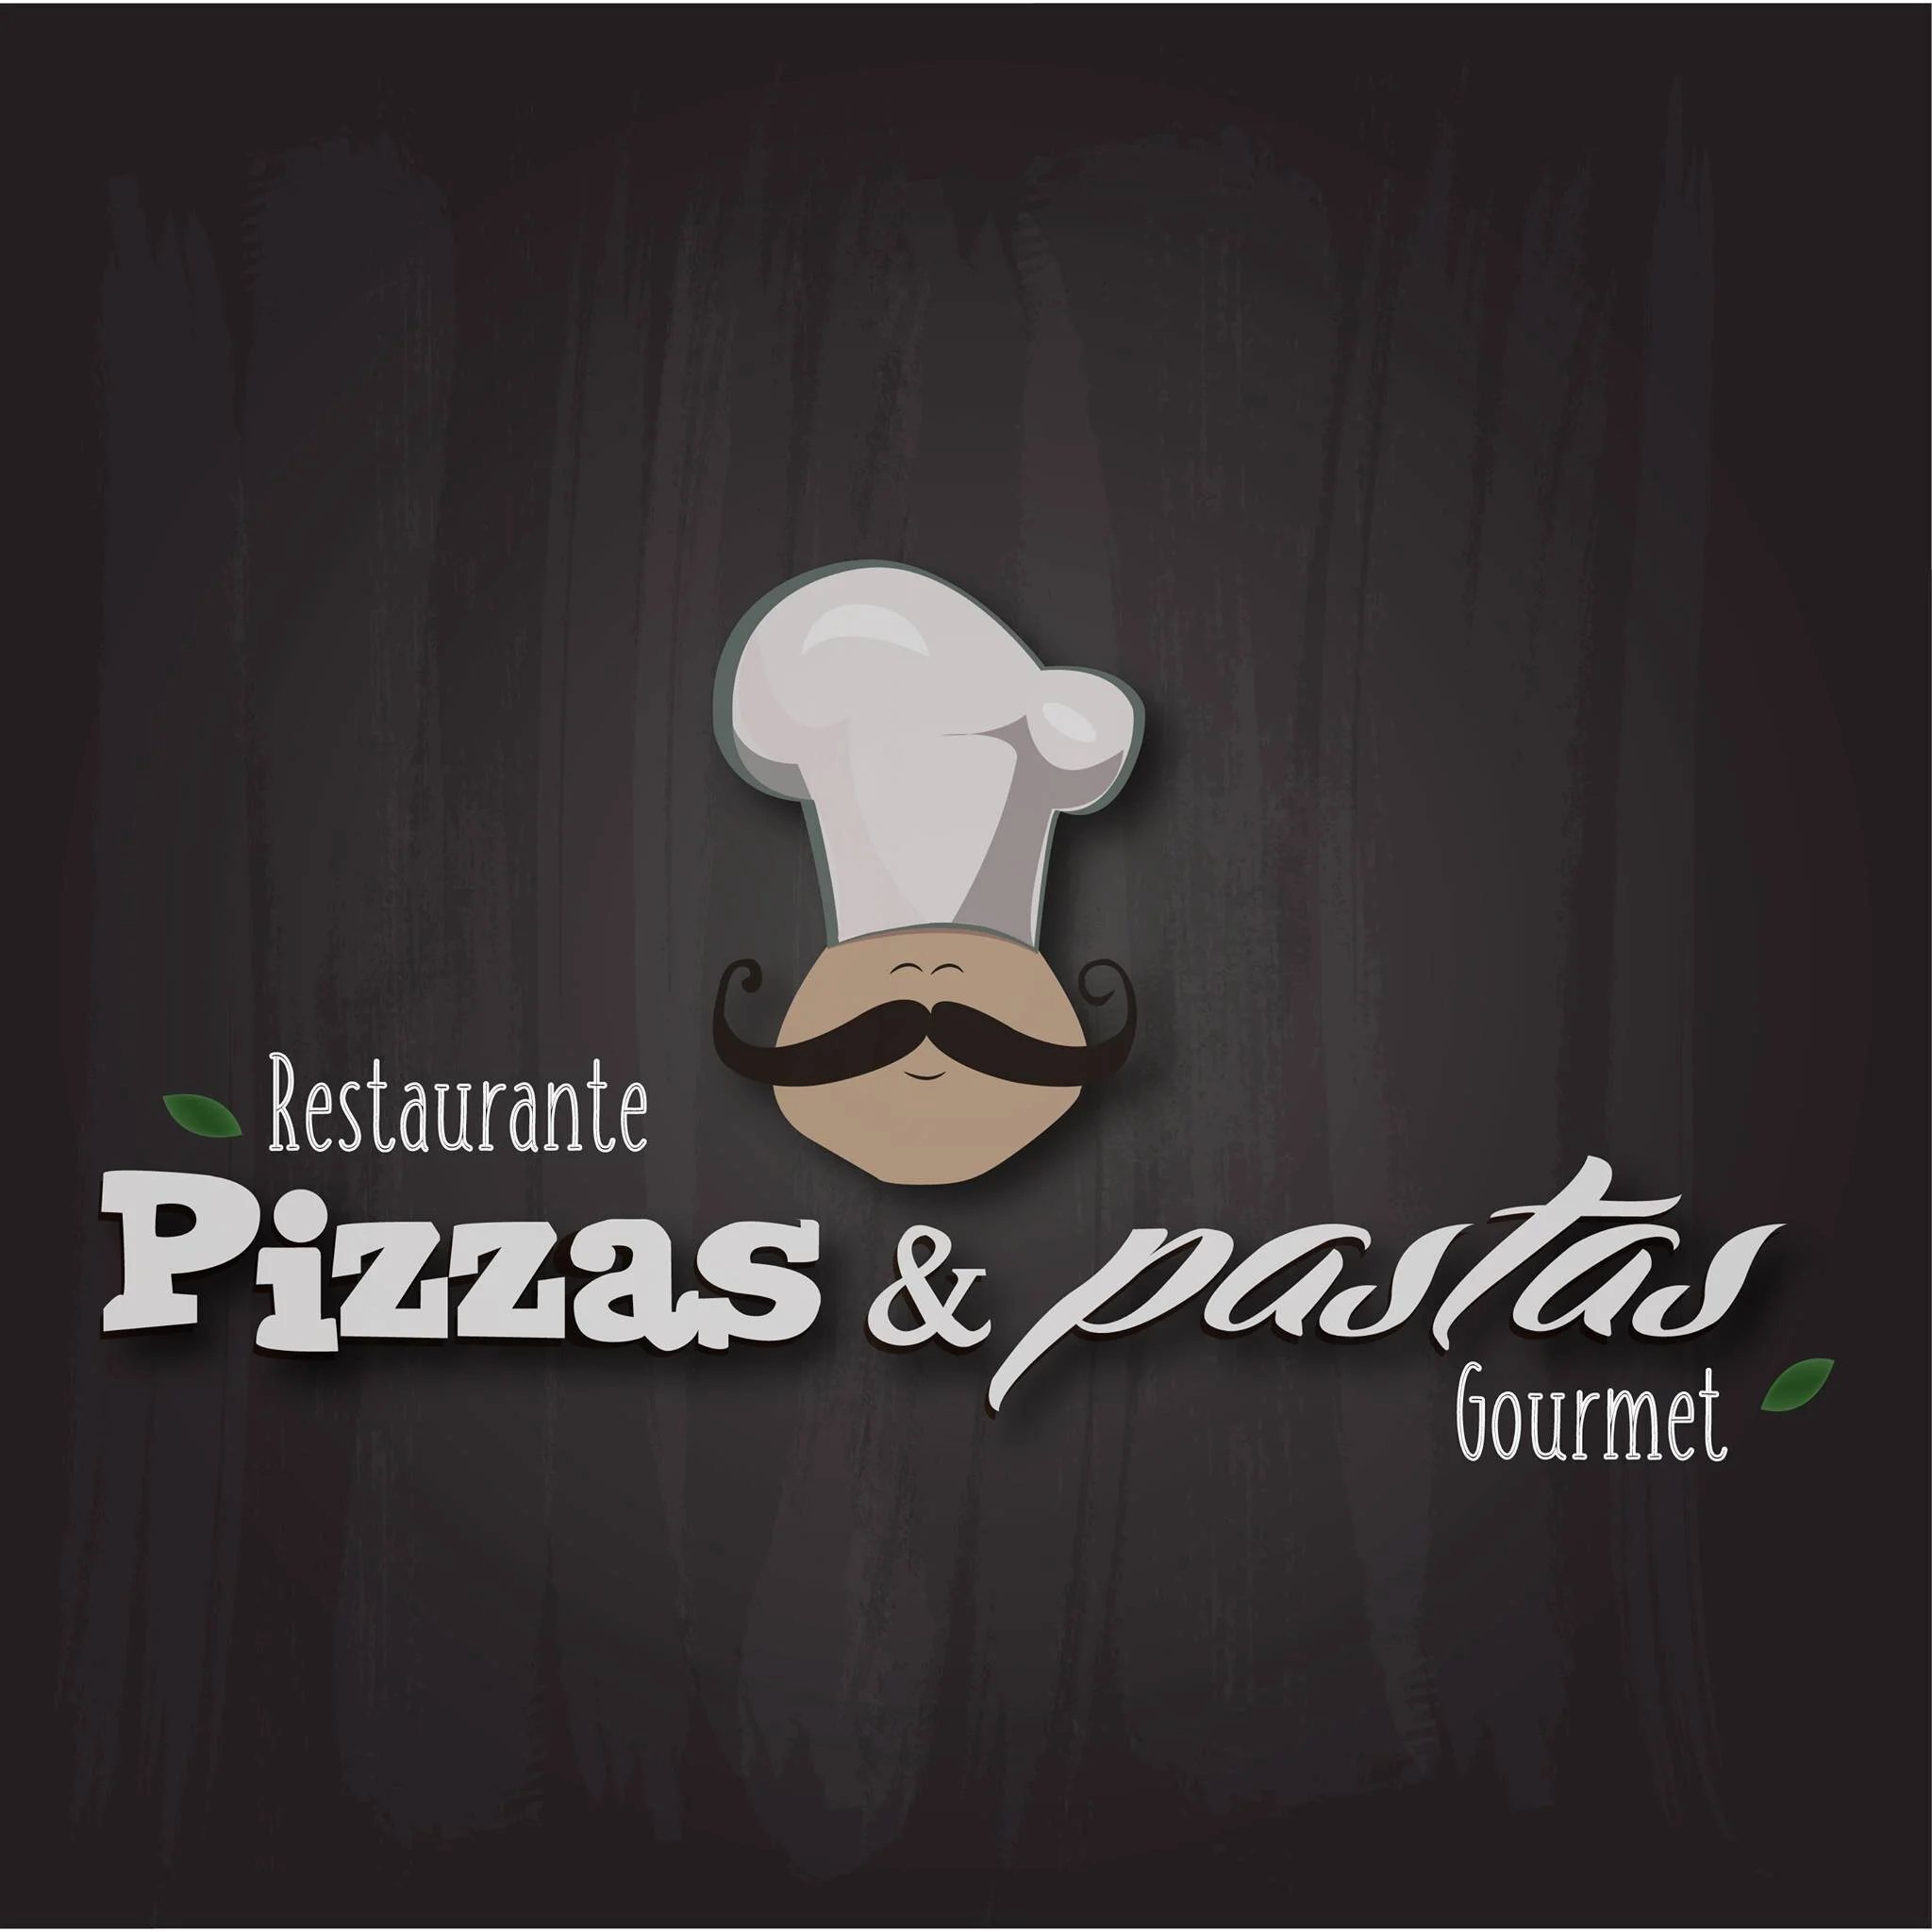 Restaurante-pizzas-pastas-24411